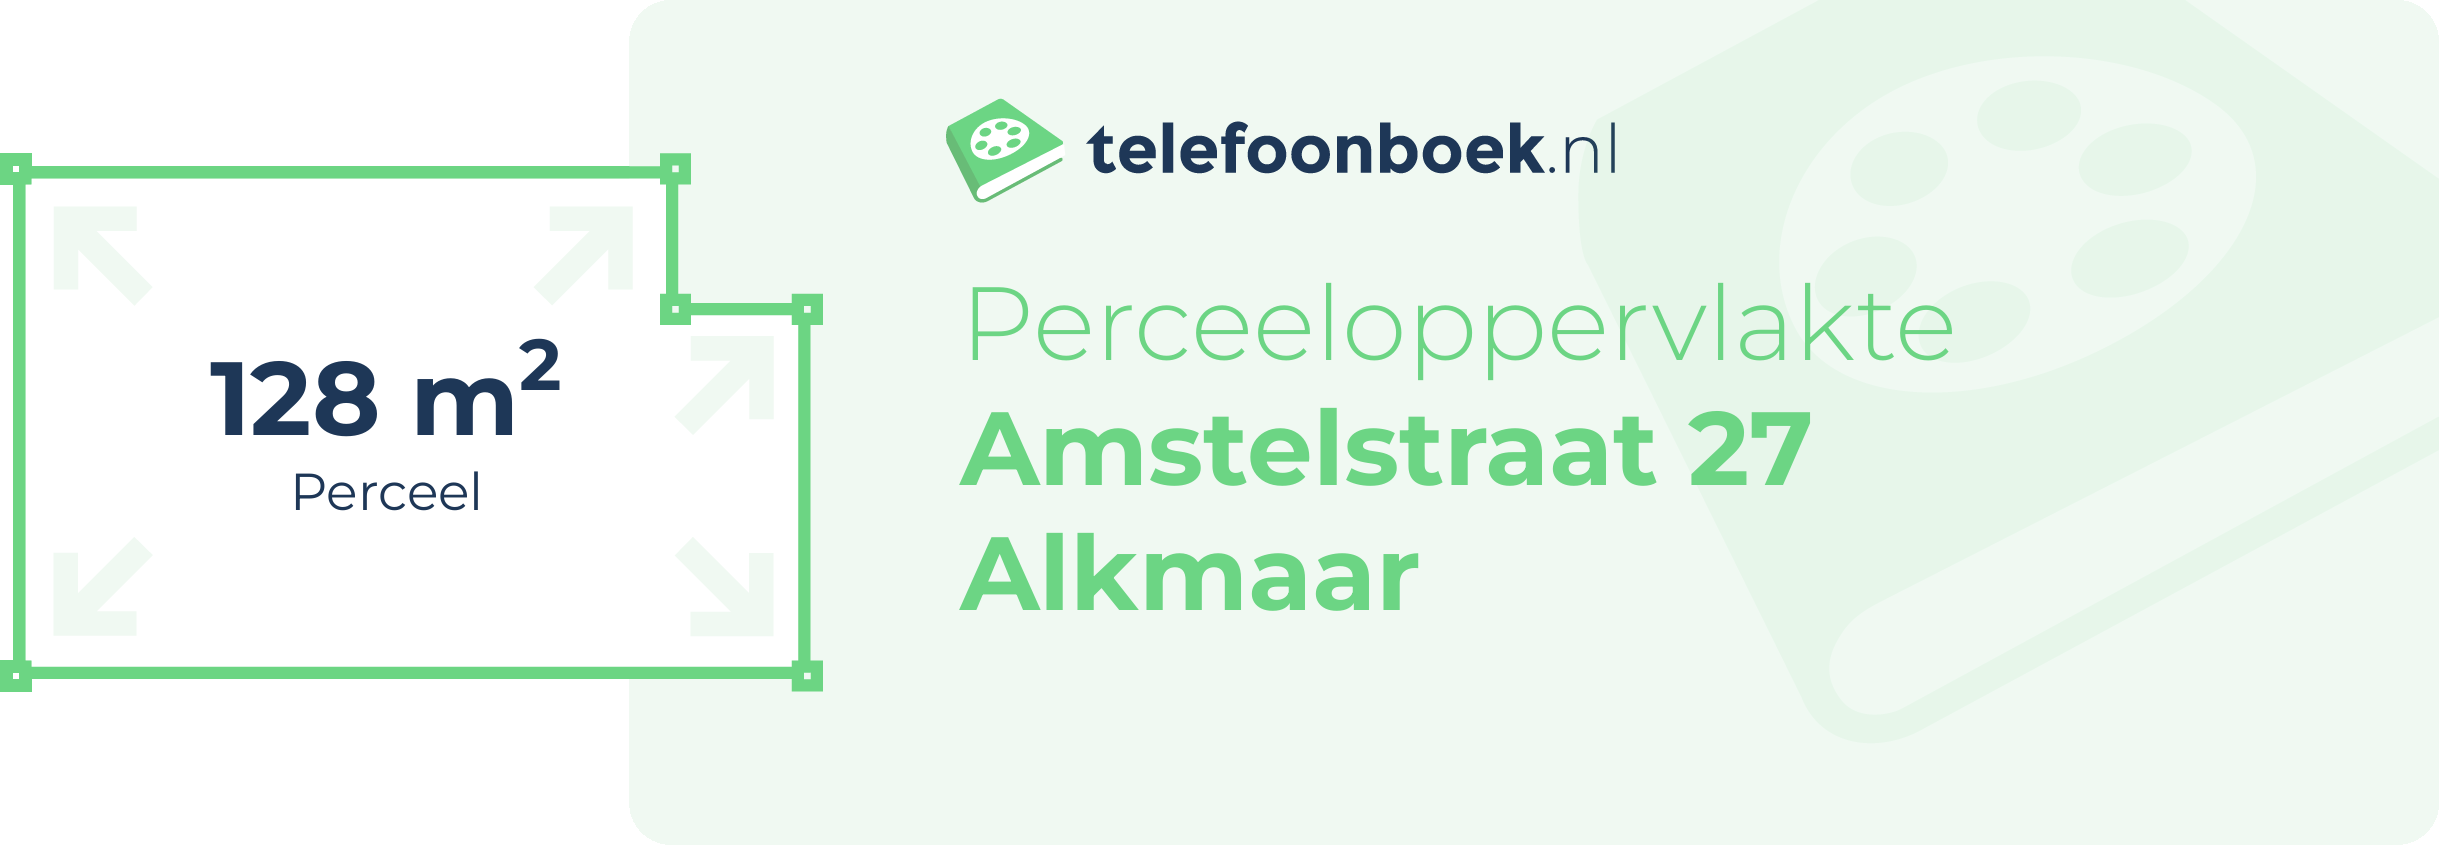 Perceeloppervlakte Amstelstraat 27 Alkmaar